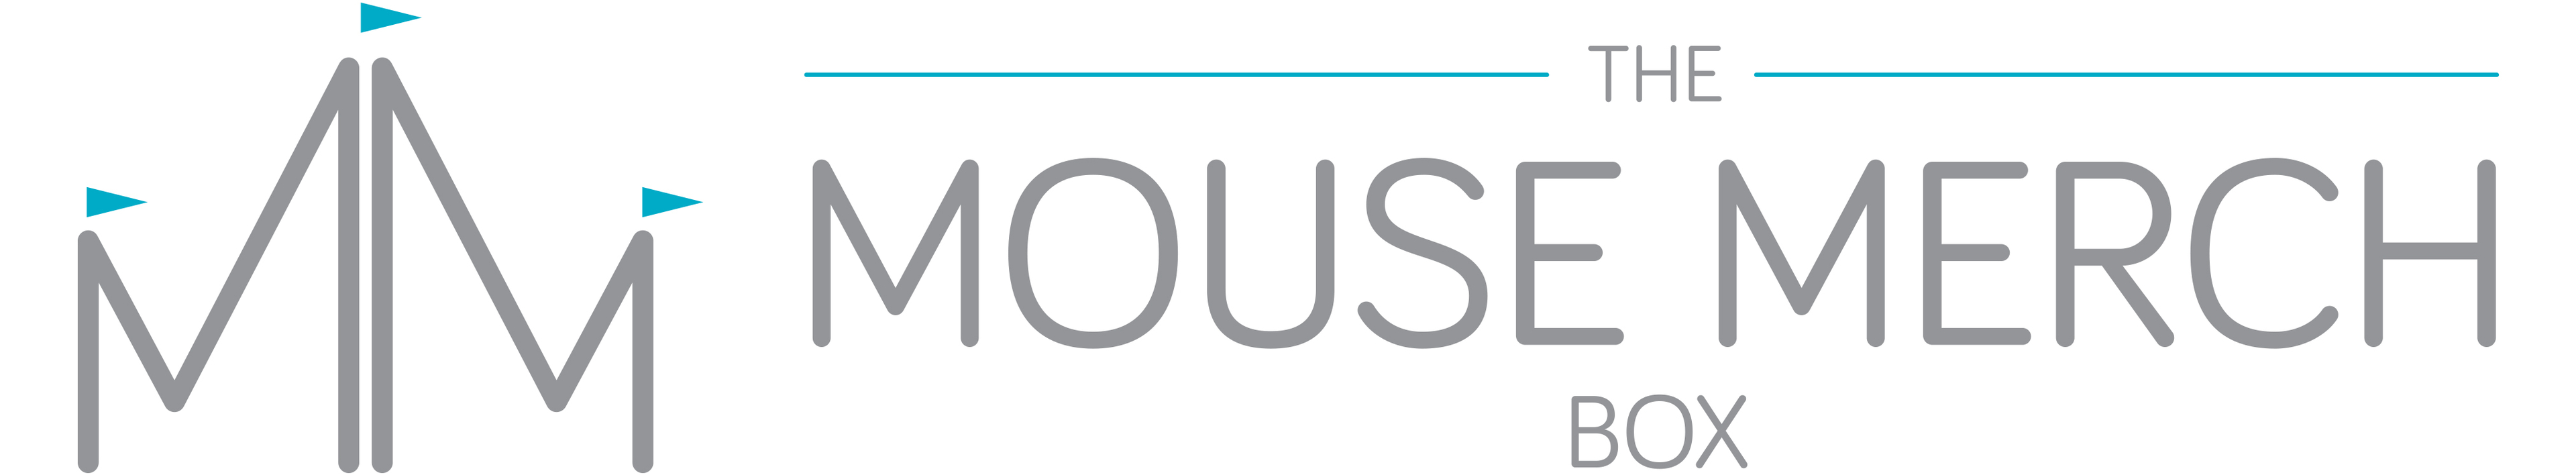 the-mouse-merch-box logo